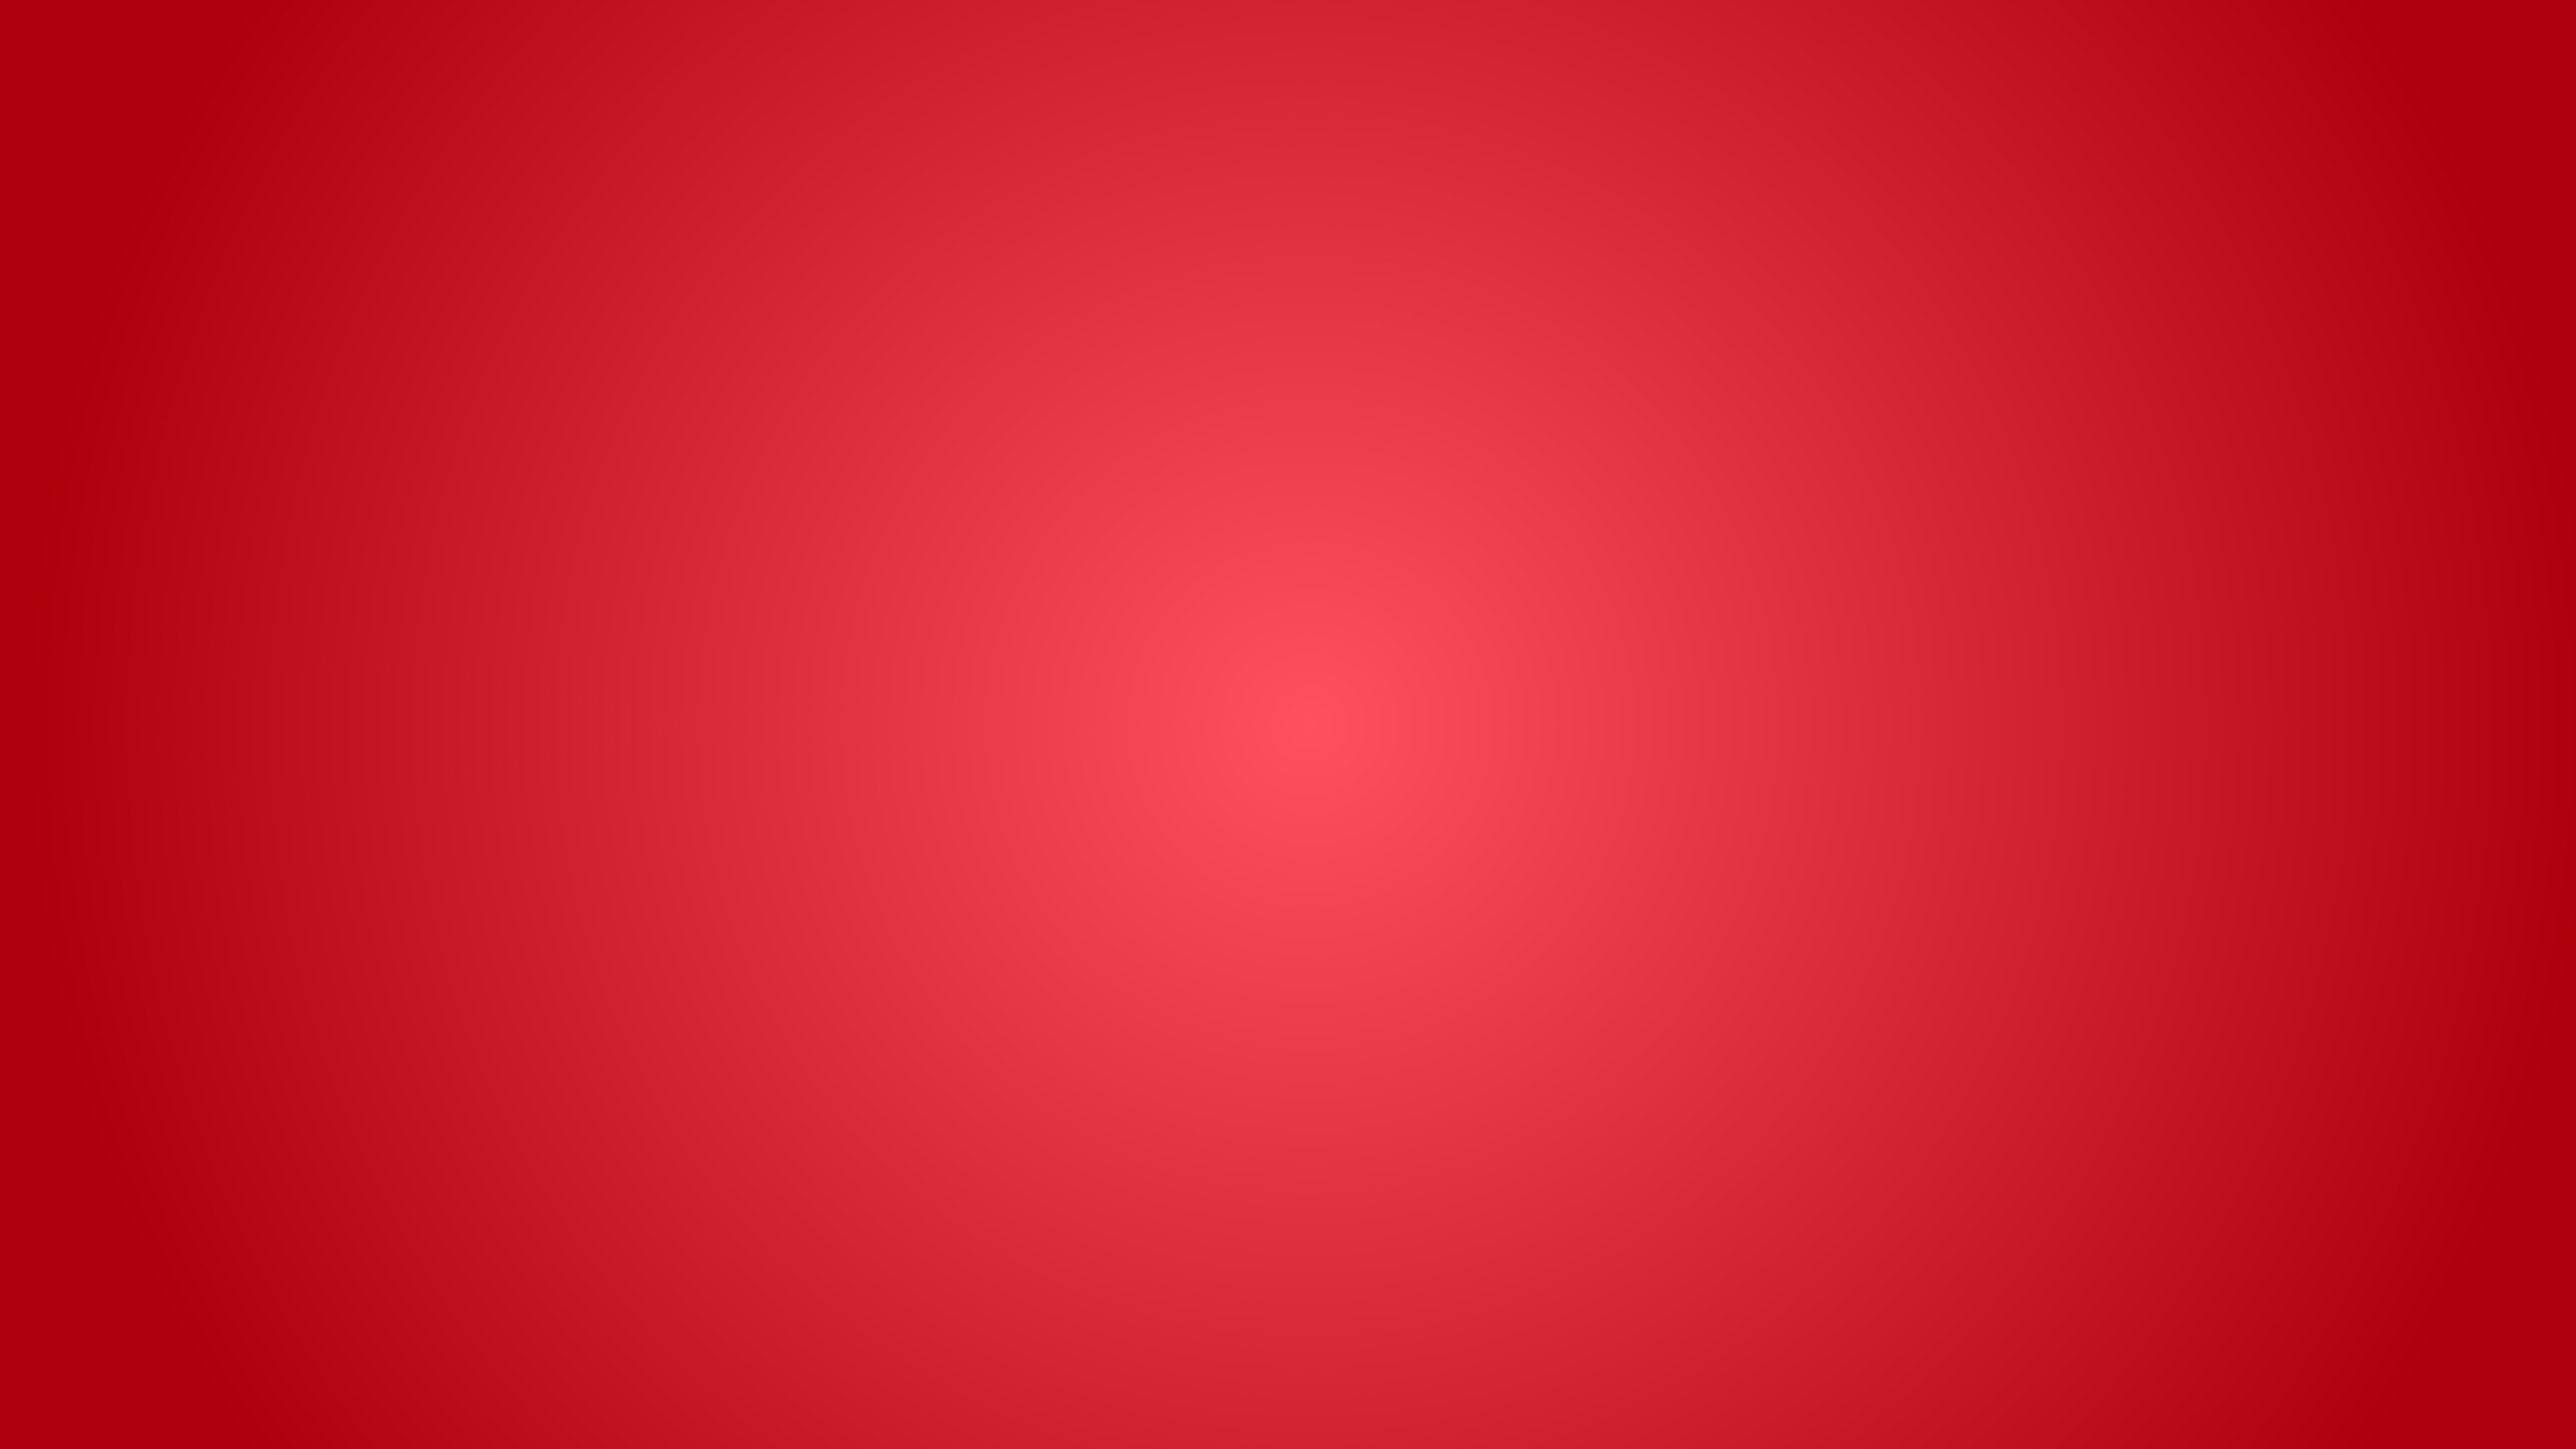 Red Gradient Background